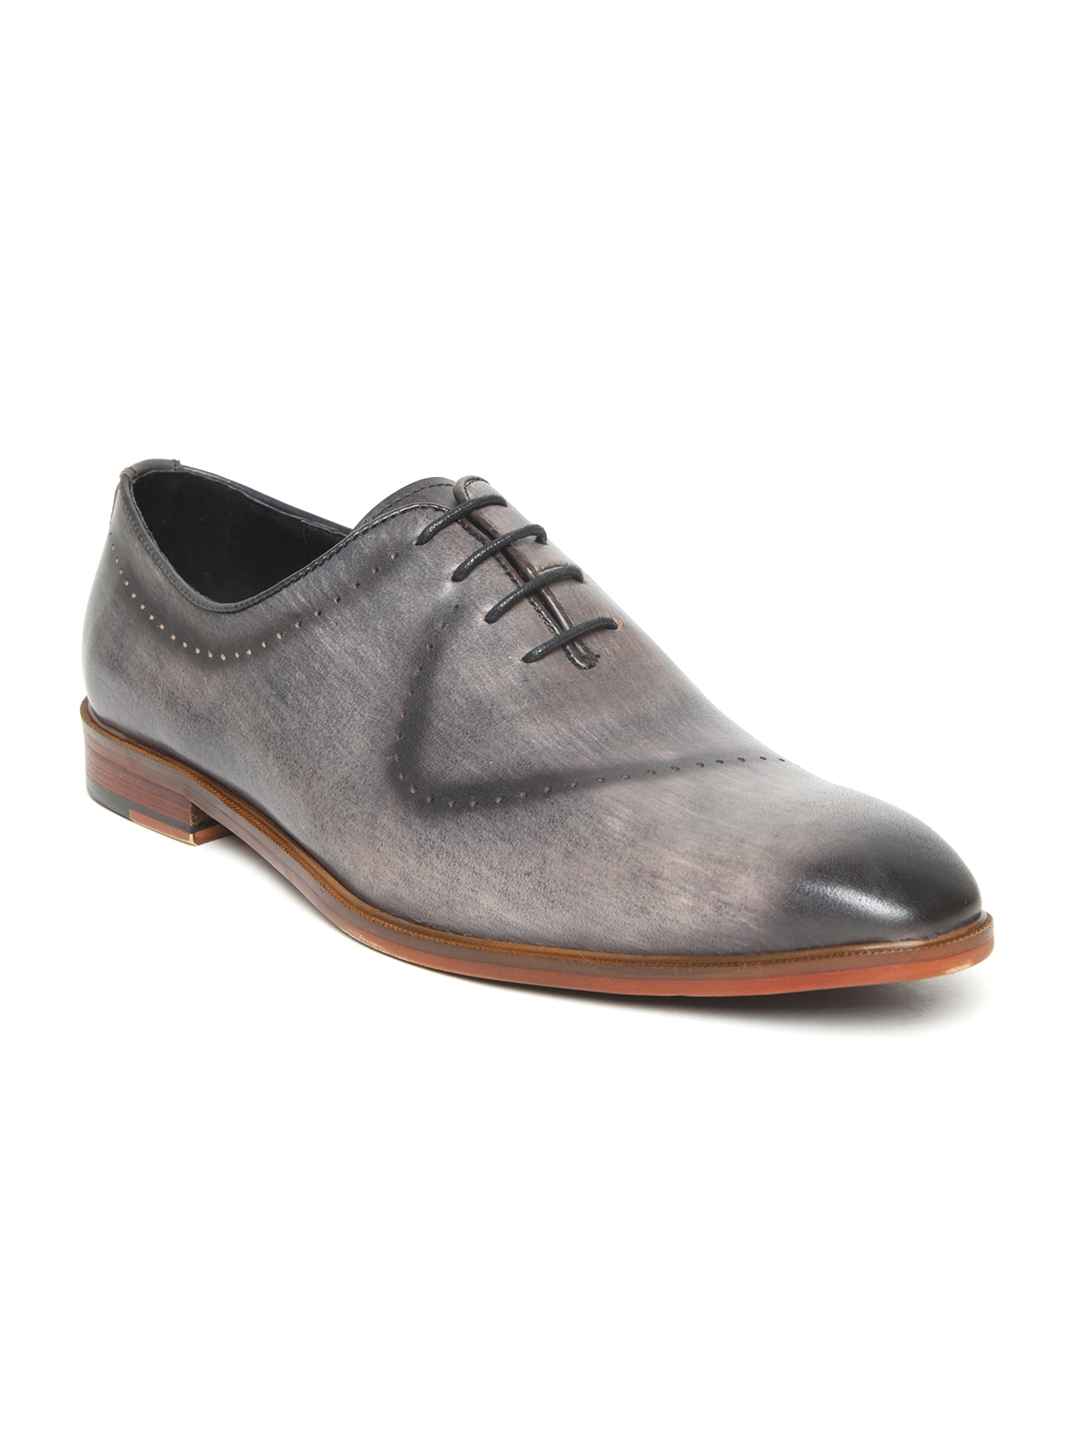 grey mens dress shoes